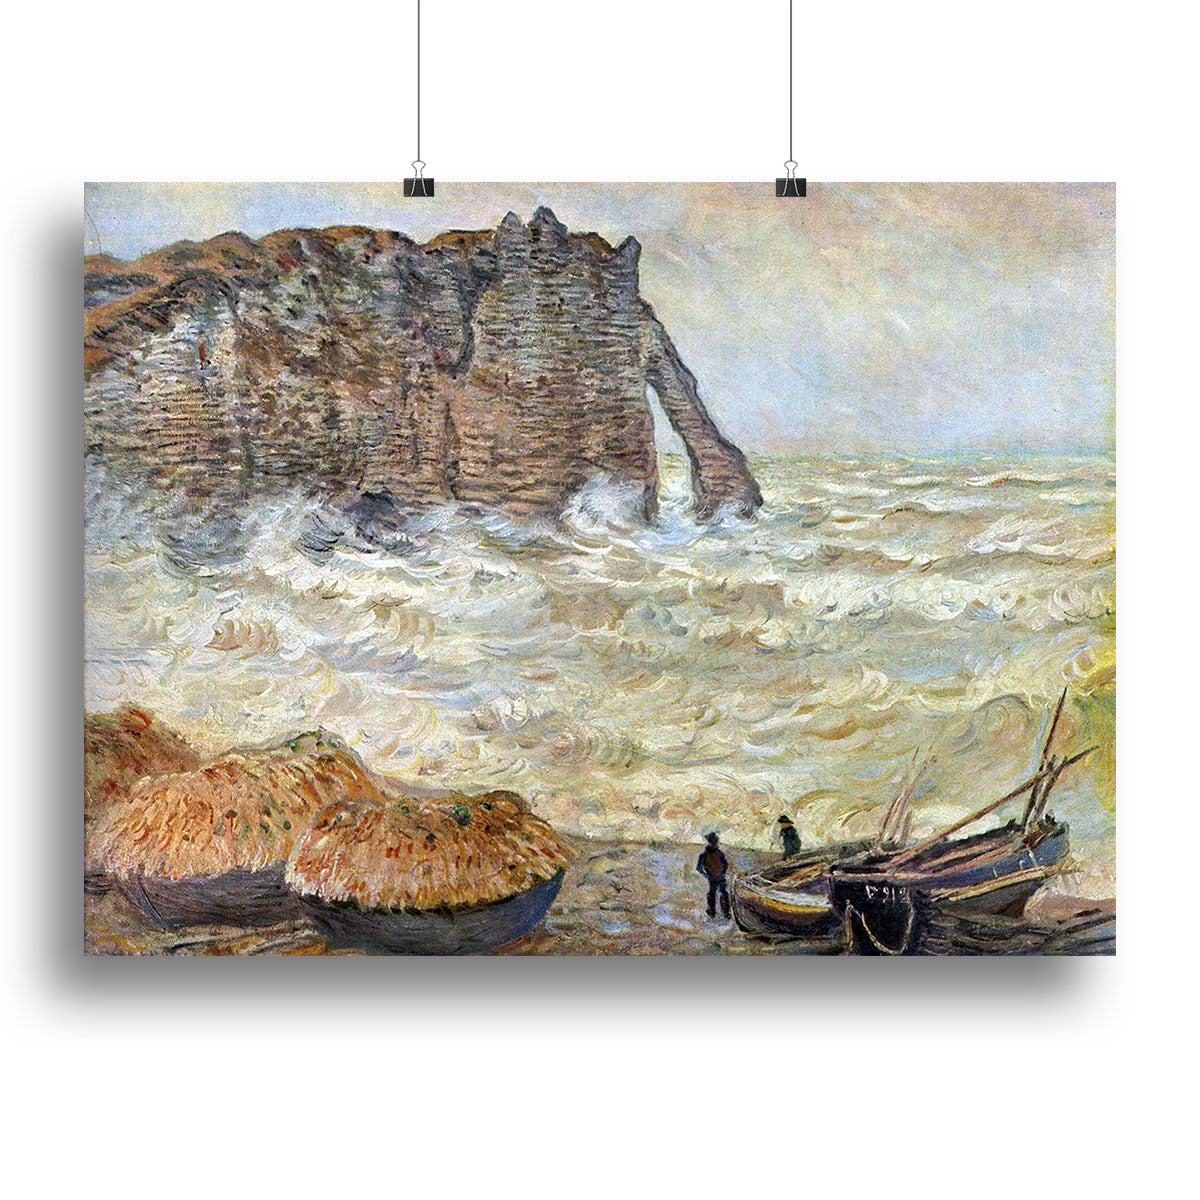 Stormy Sea La Porte d'Aval by Monet Canvas Print or Poster - Canvas Art Rocks - 2